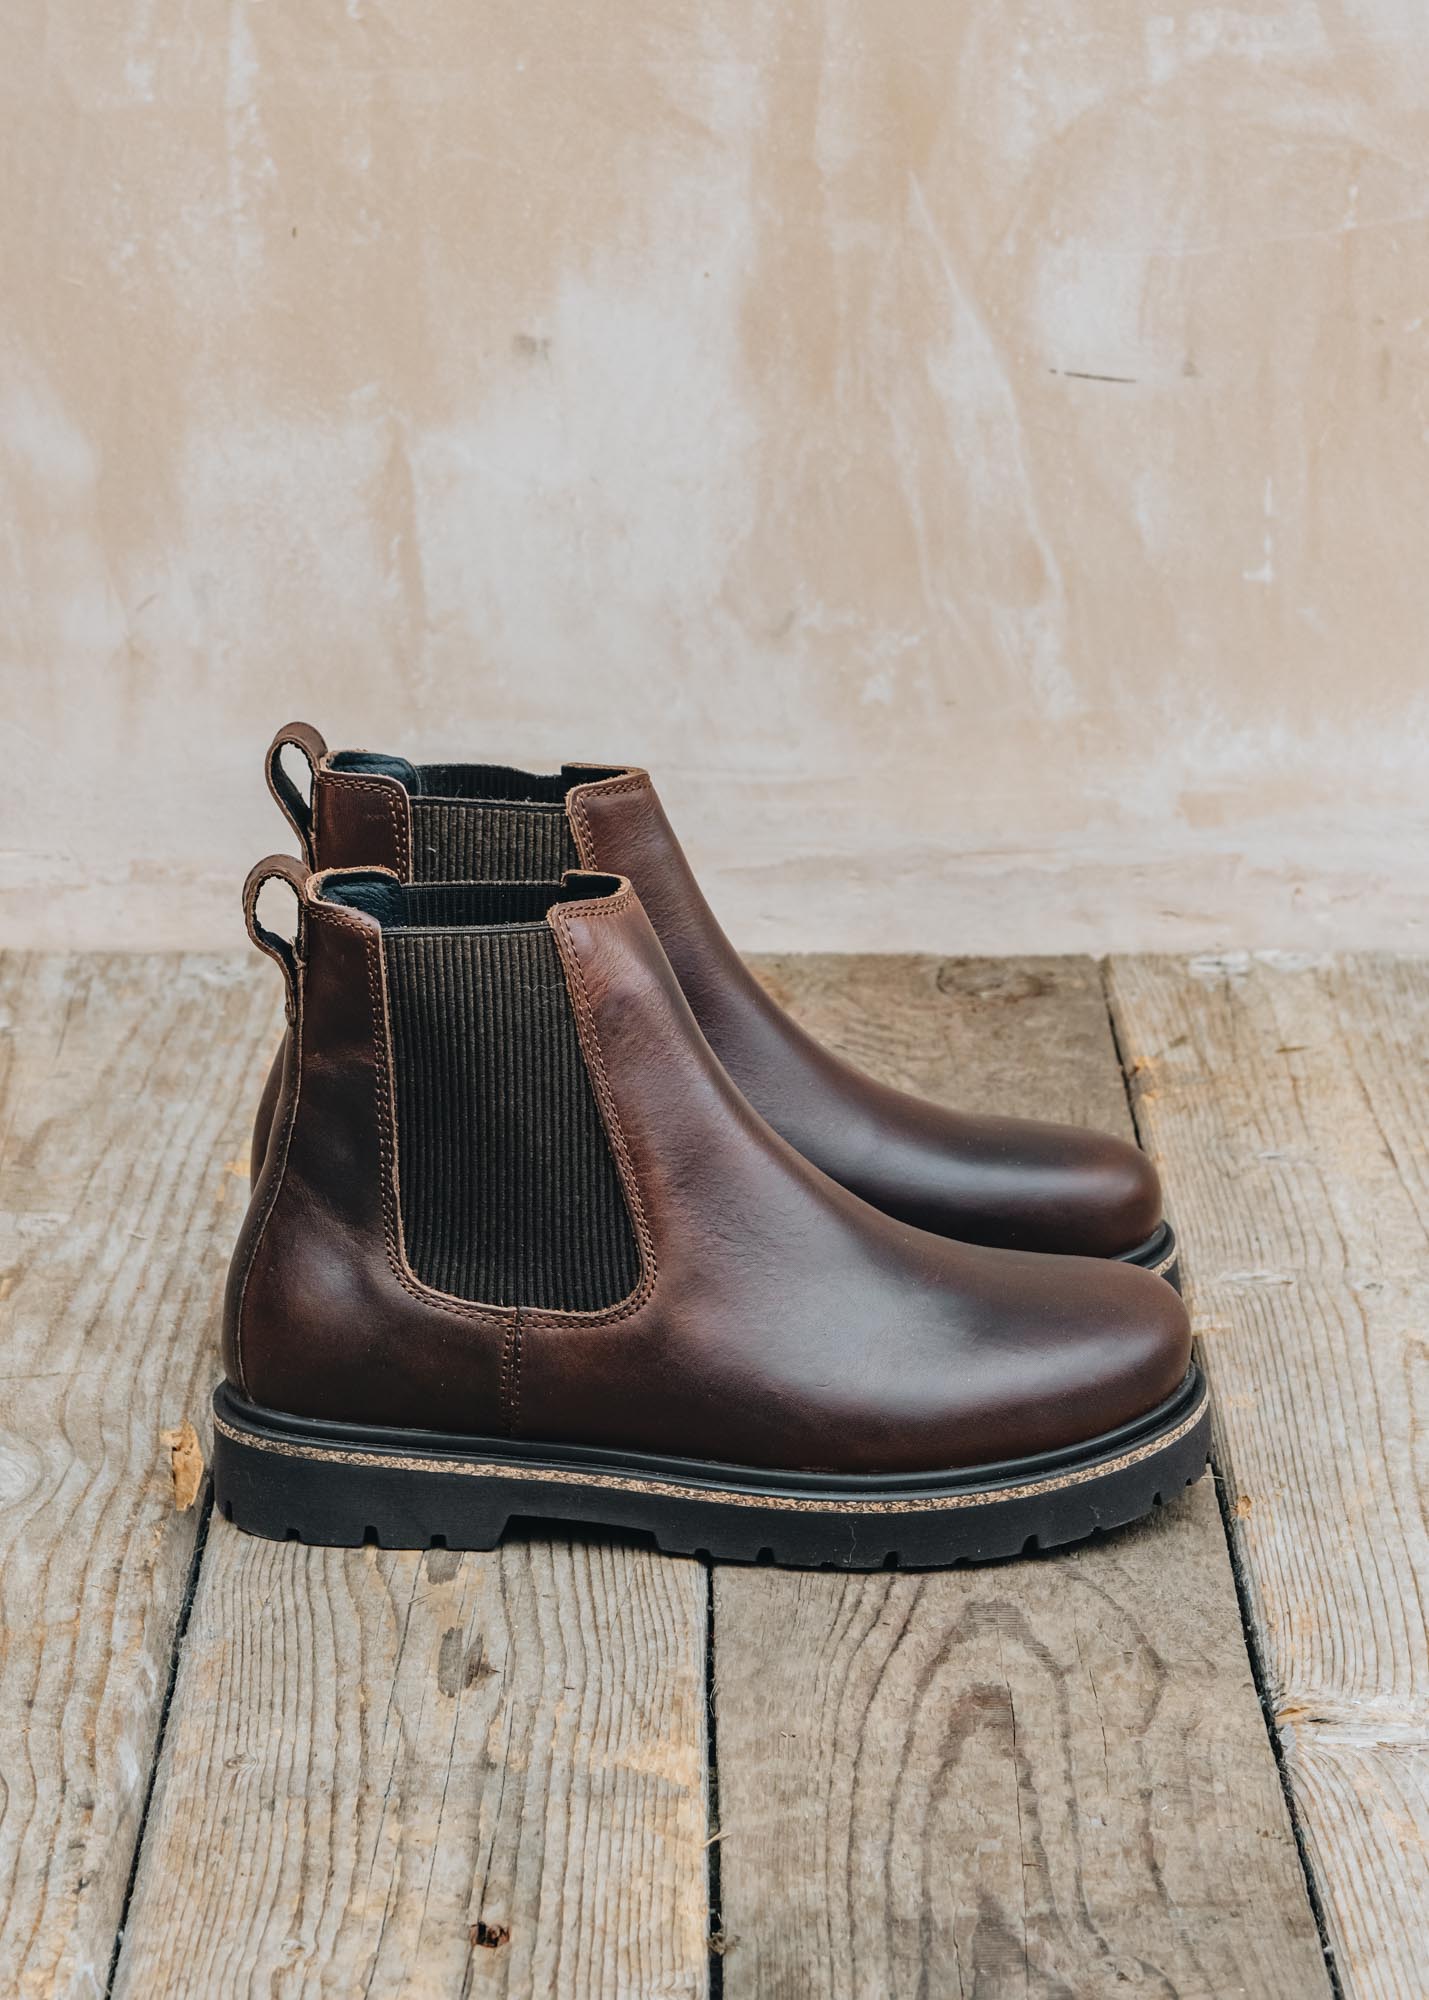 Women's Narrow Birkenstock Highwood Slip-Ons in Chocolate Leather